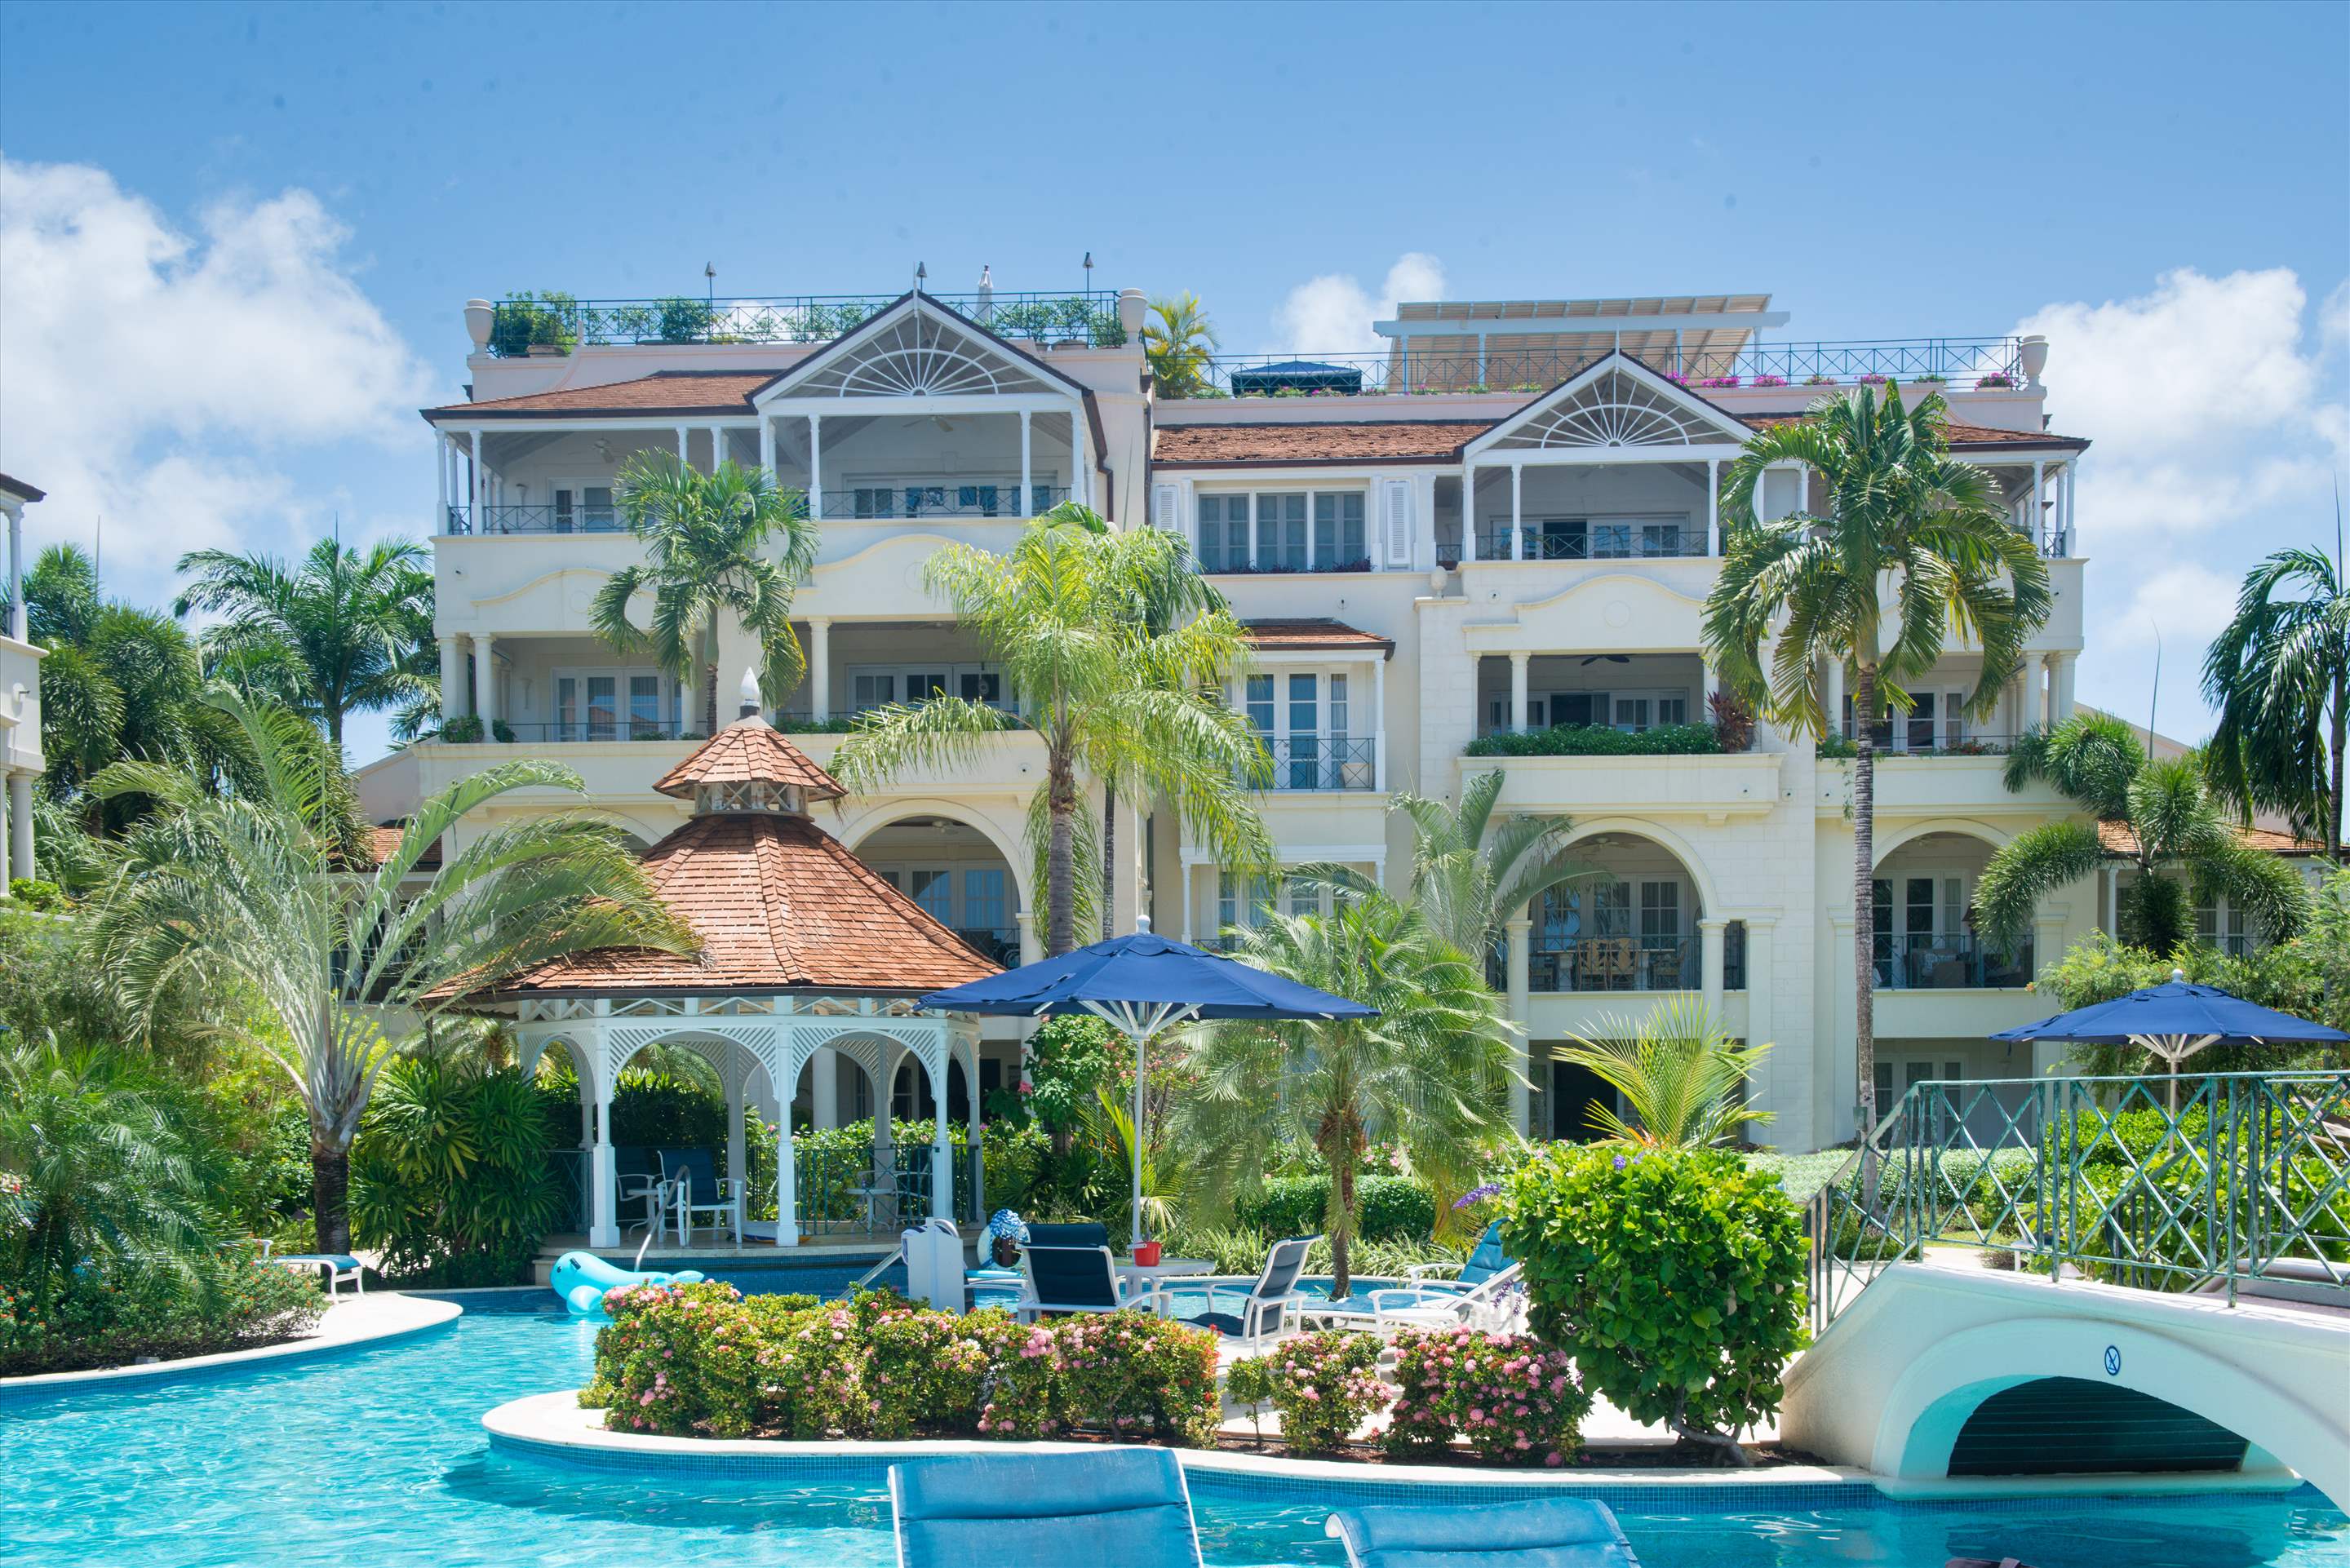 Schooner Bay 205, One Bedroom rate, 1 bedroom apartment in St. James & West Coast, Barbados Photo #1